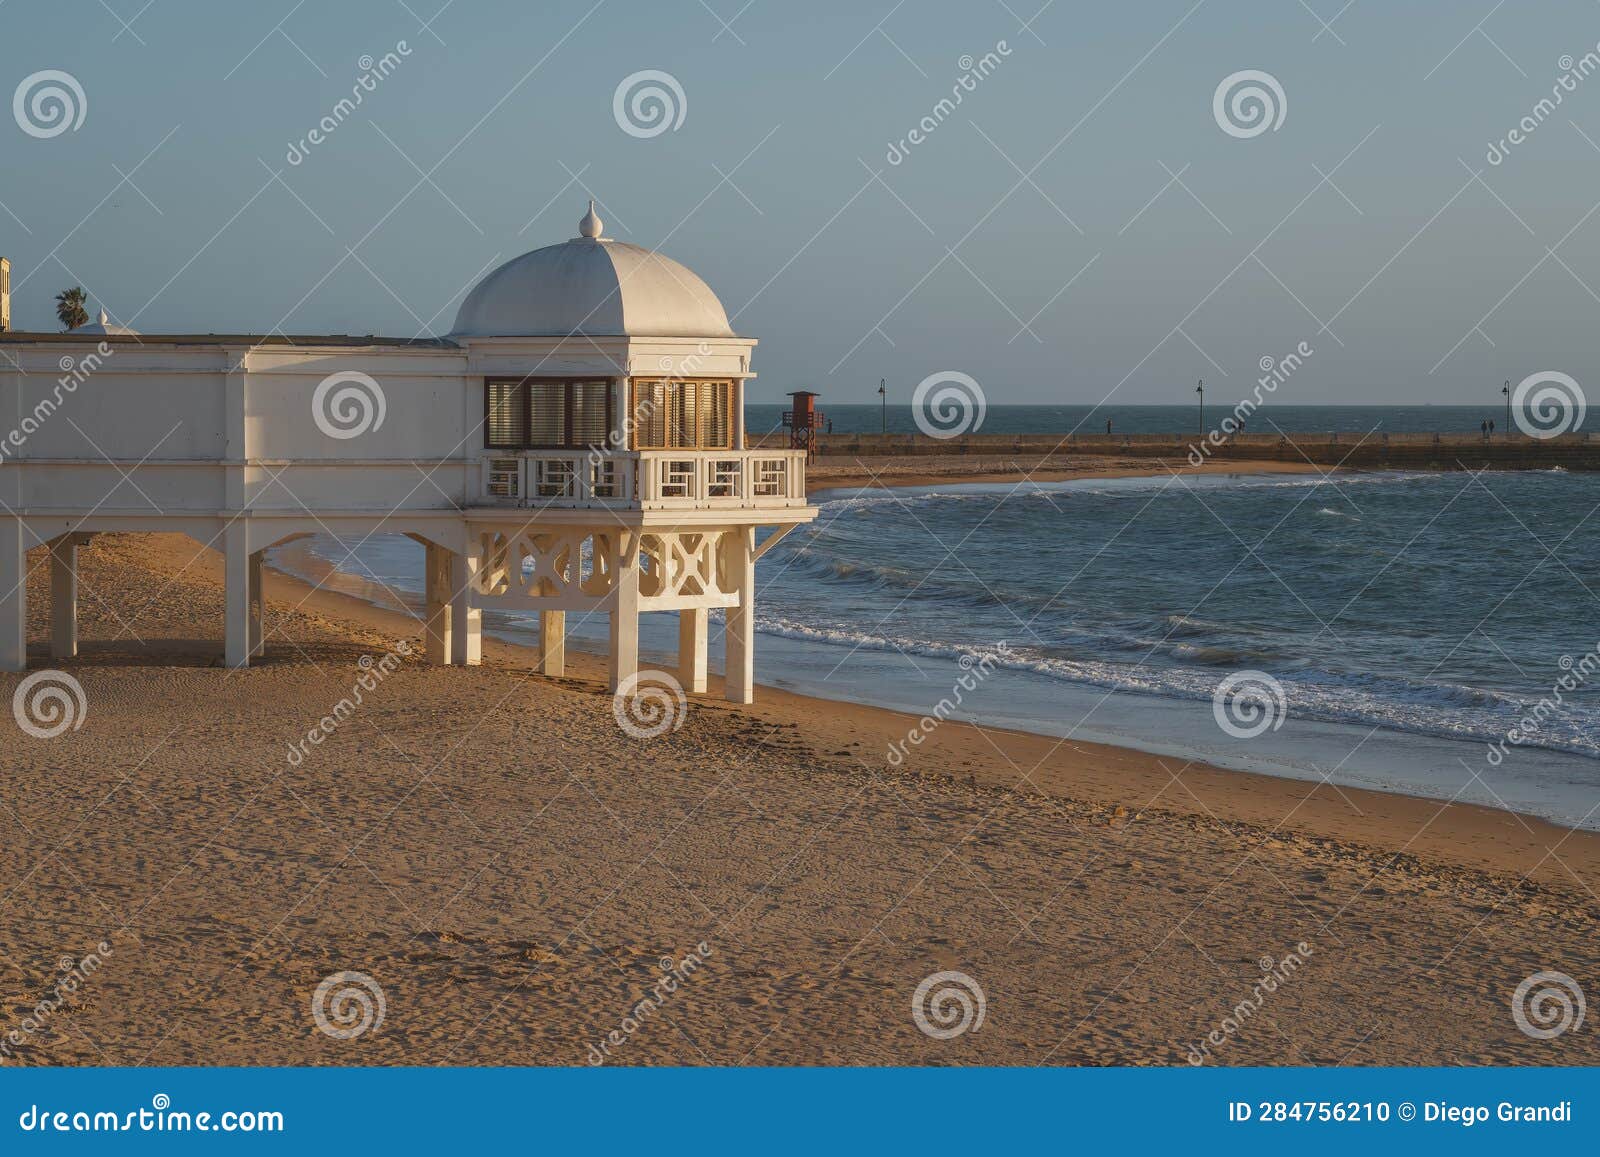 la caleta beach and balneario de la palma building at sunset - cadiz, andalusia, spain